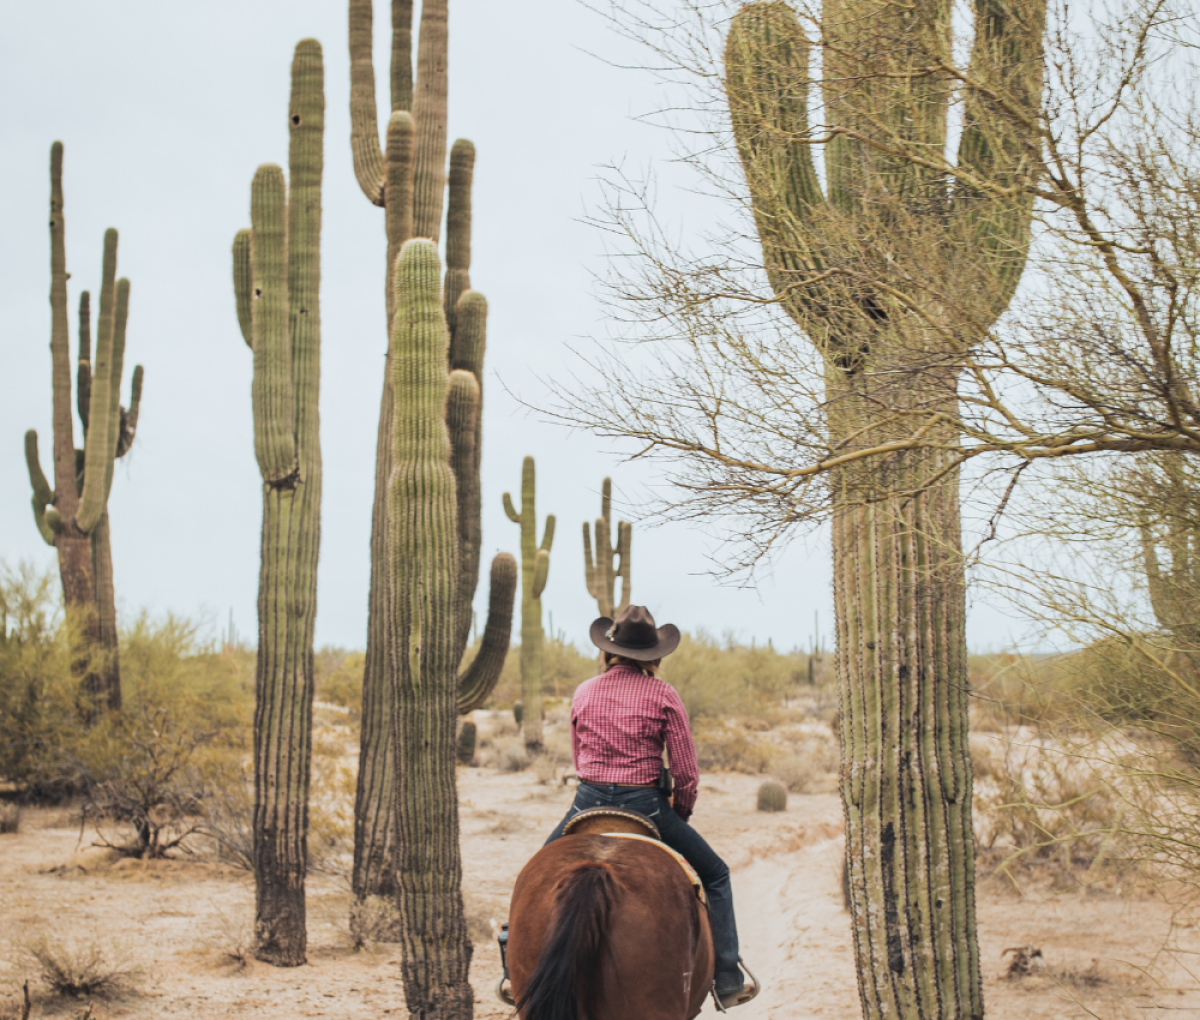 Horse riding in a desert in Scottsdale, Arizona